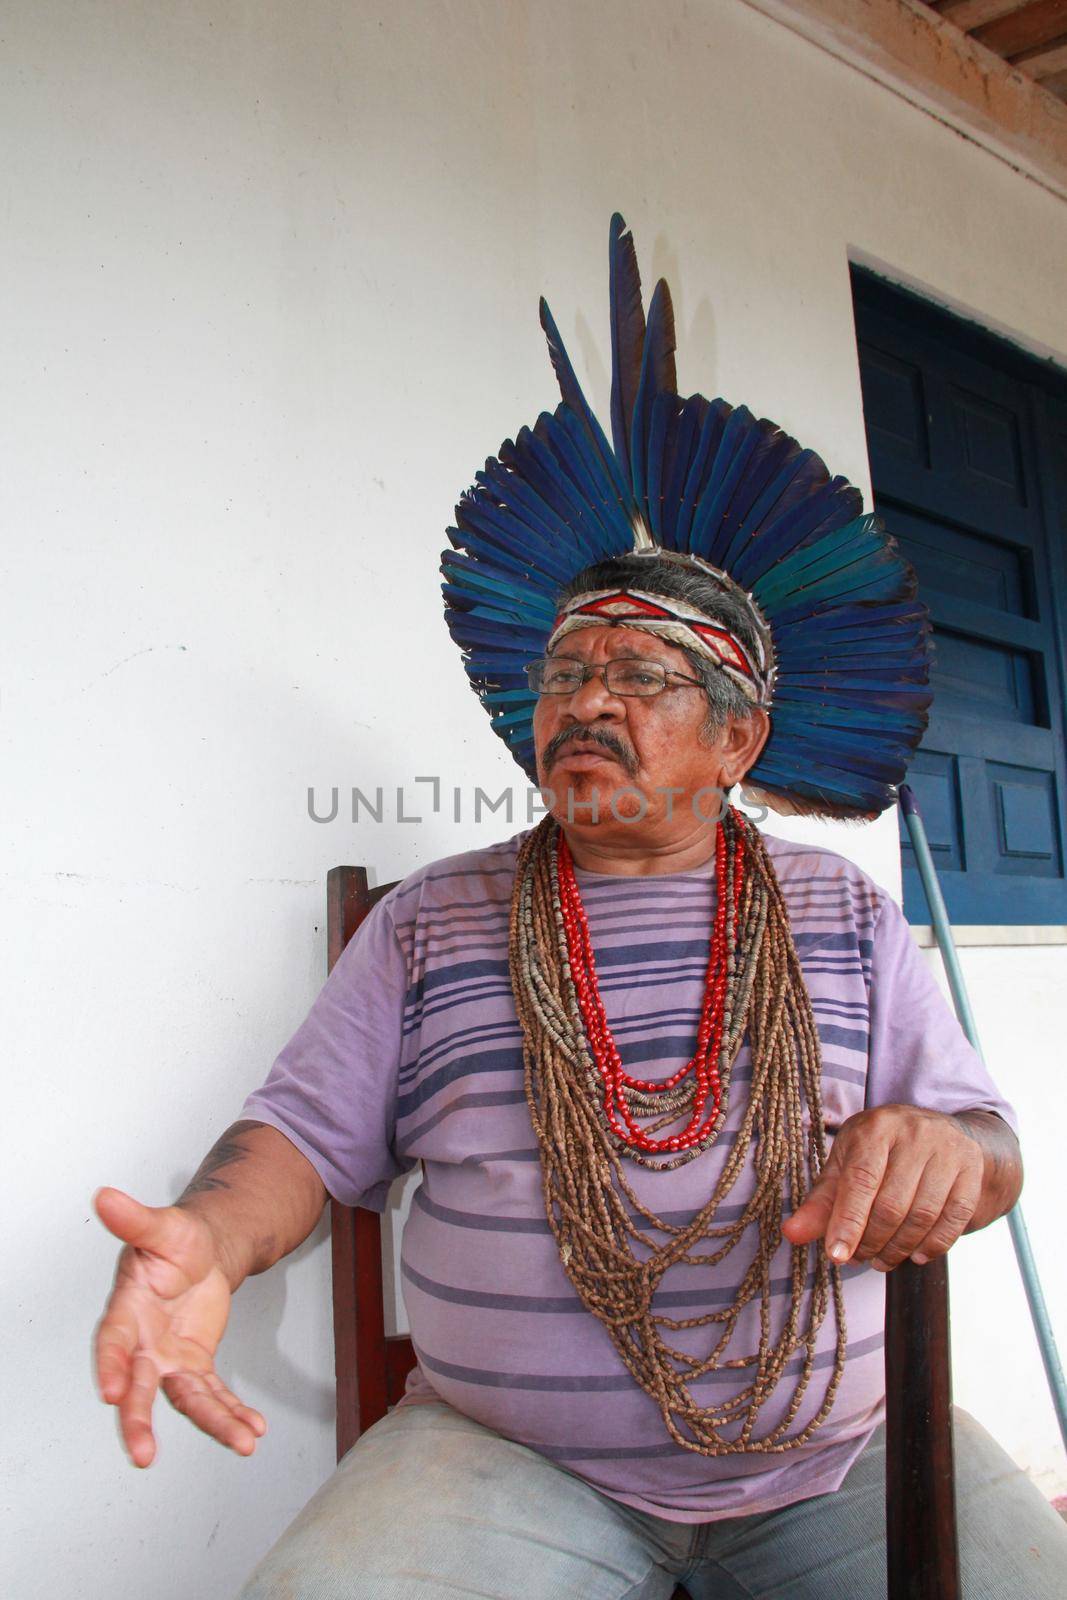 pau brasil , bahia / brazil - may 10, 2012: Nailton Muniz, chieftain and indigenous leader Pataxo Hahahae in the municipality of Pau Brazil.